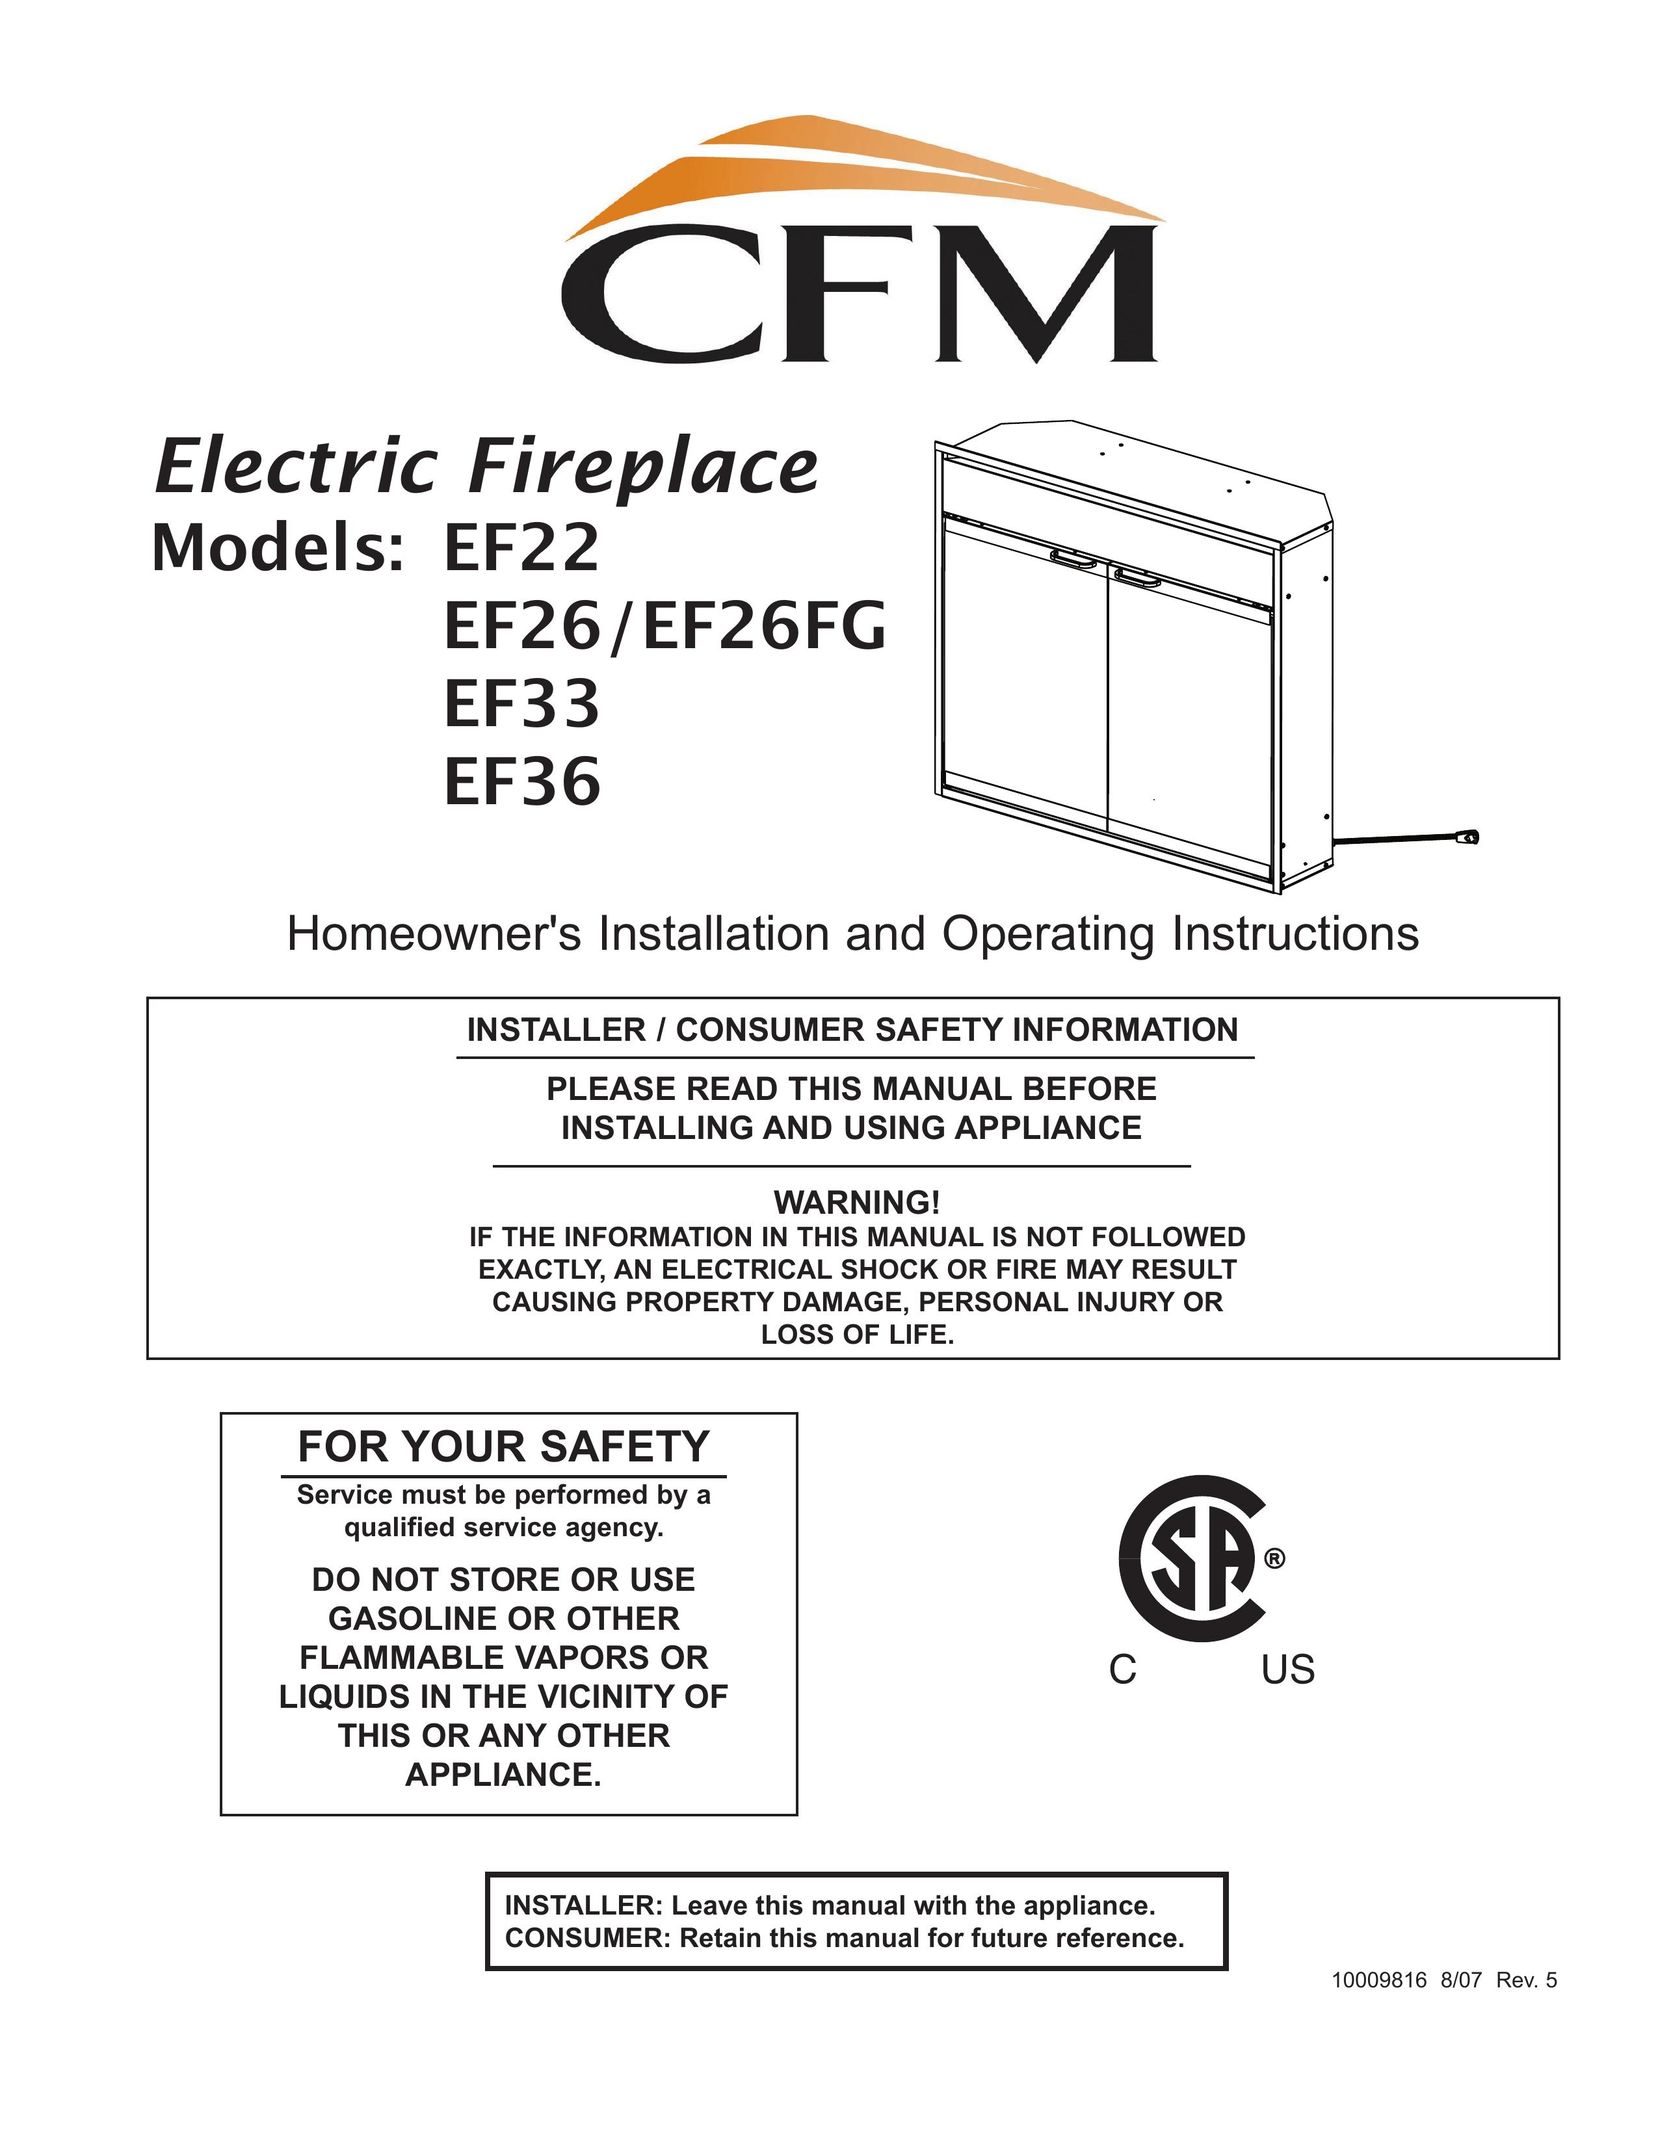 CFM Corporation EF33 Indoor Fireplace User Manual